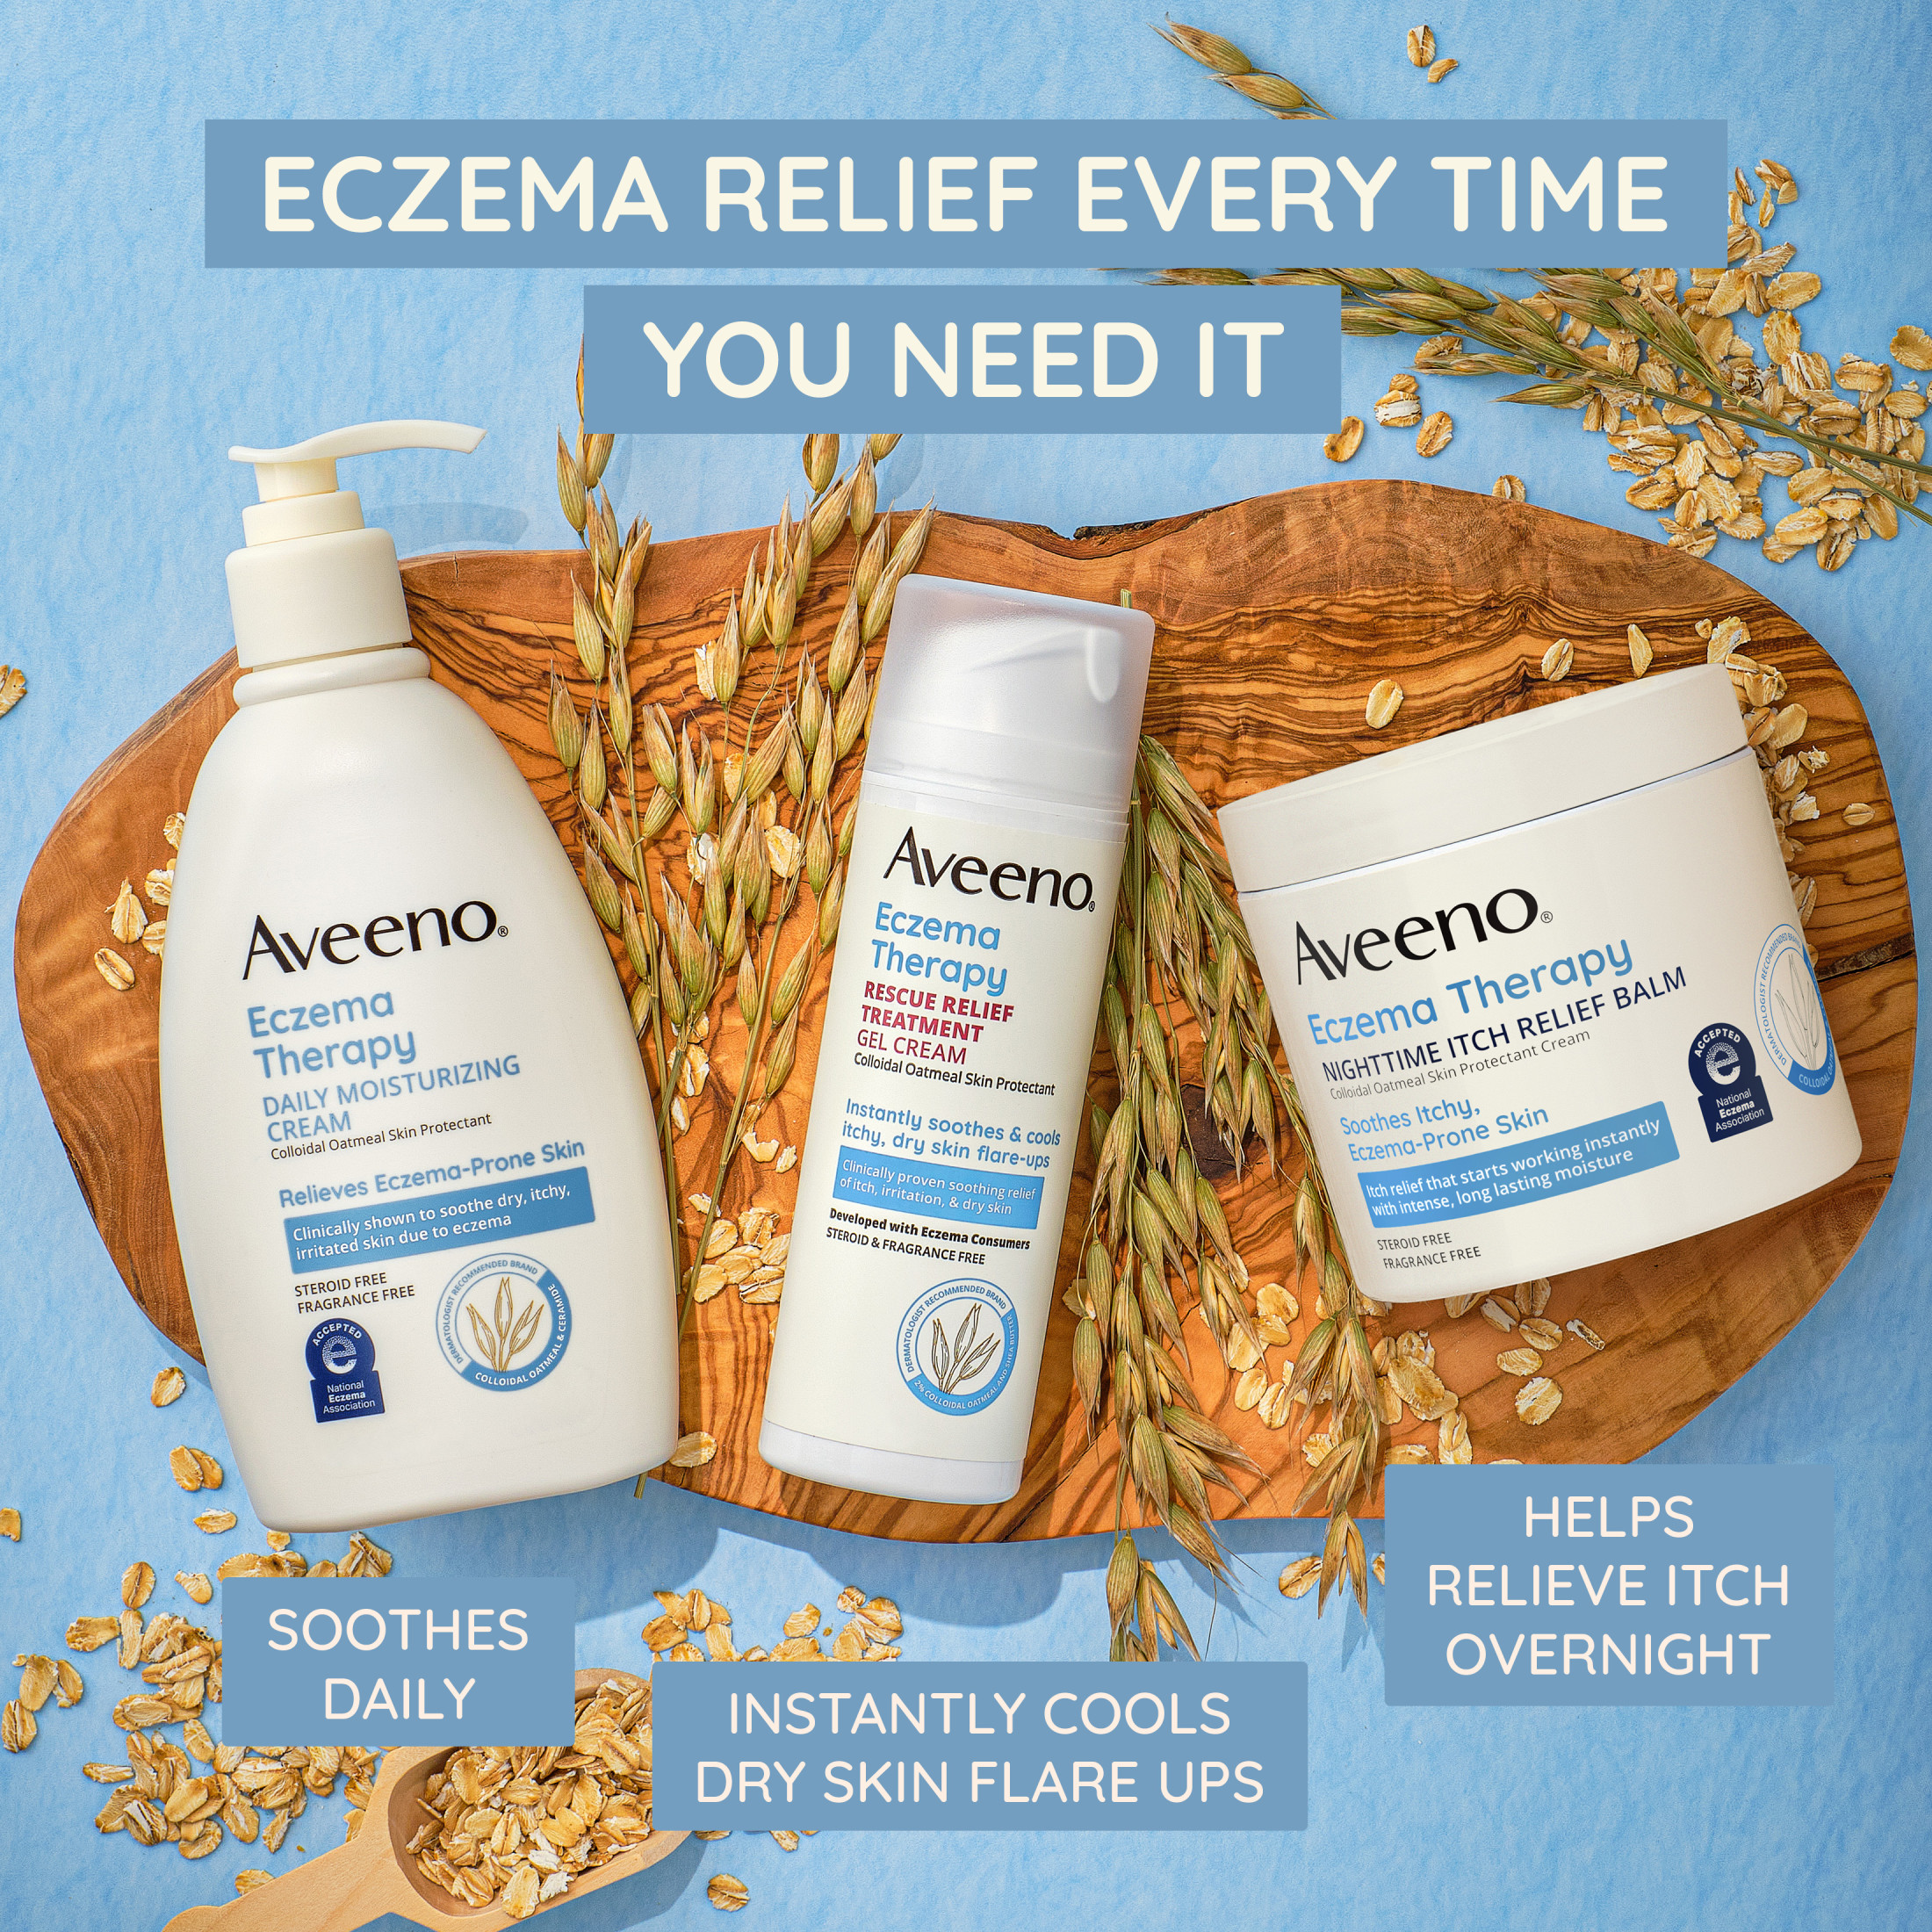 Aveeno Eczema Therapy Daily Moisturizing Body Lotion, Fragrance Free Cream, 7.3 oz - image 4 of 11